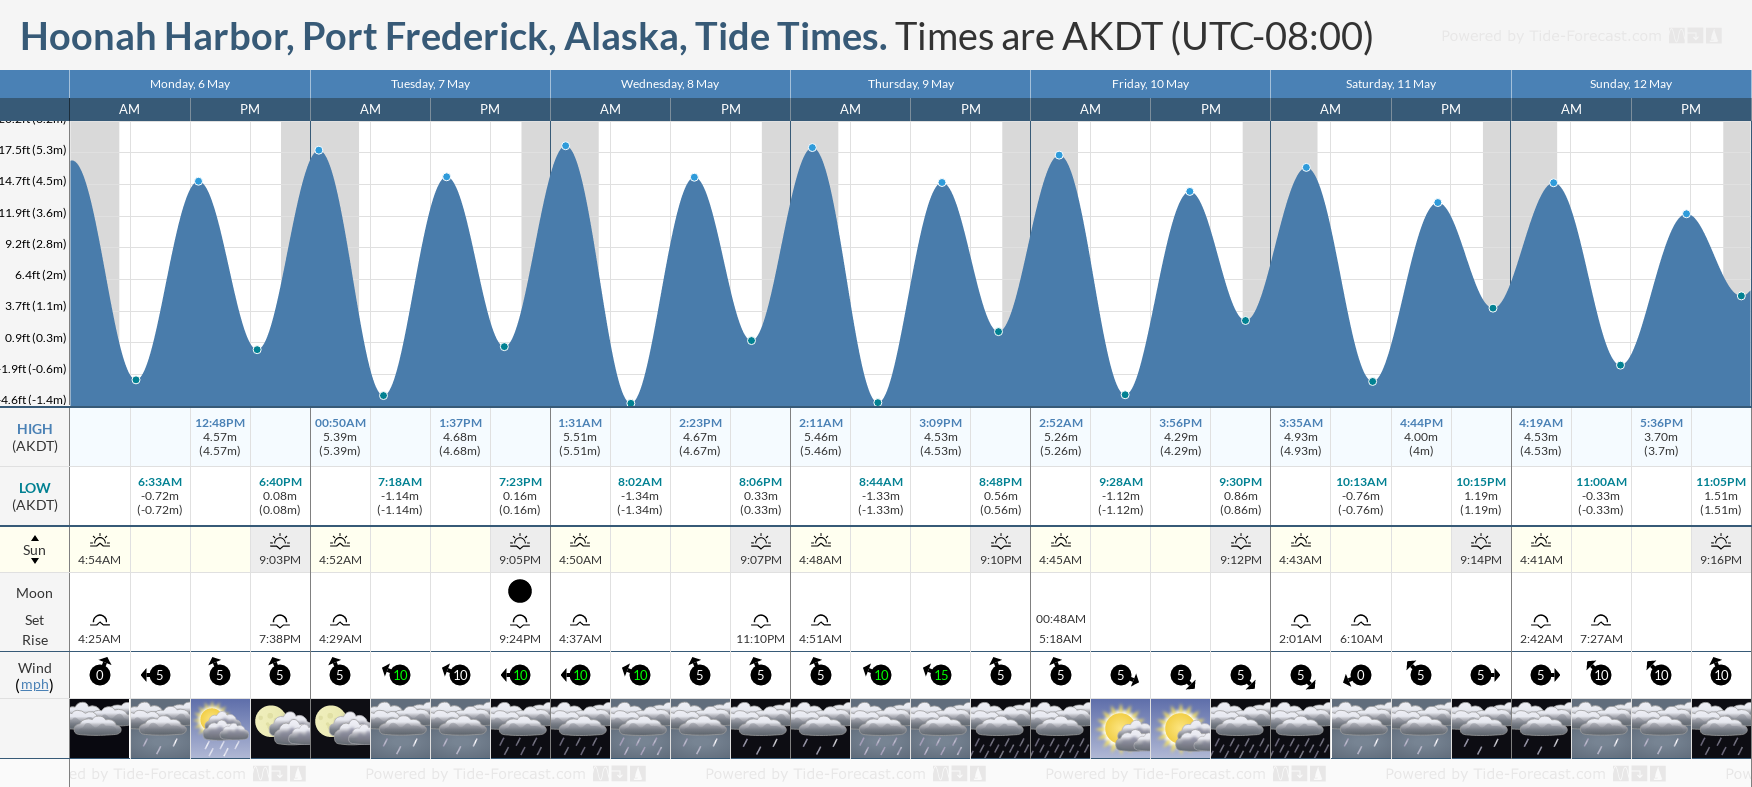 Hoonah Harbor, Port Frederick, Alaska Tide Chart including high and low tide tide times for the next 7 days